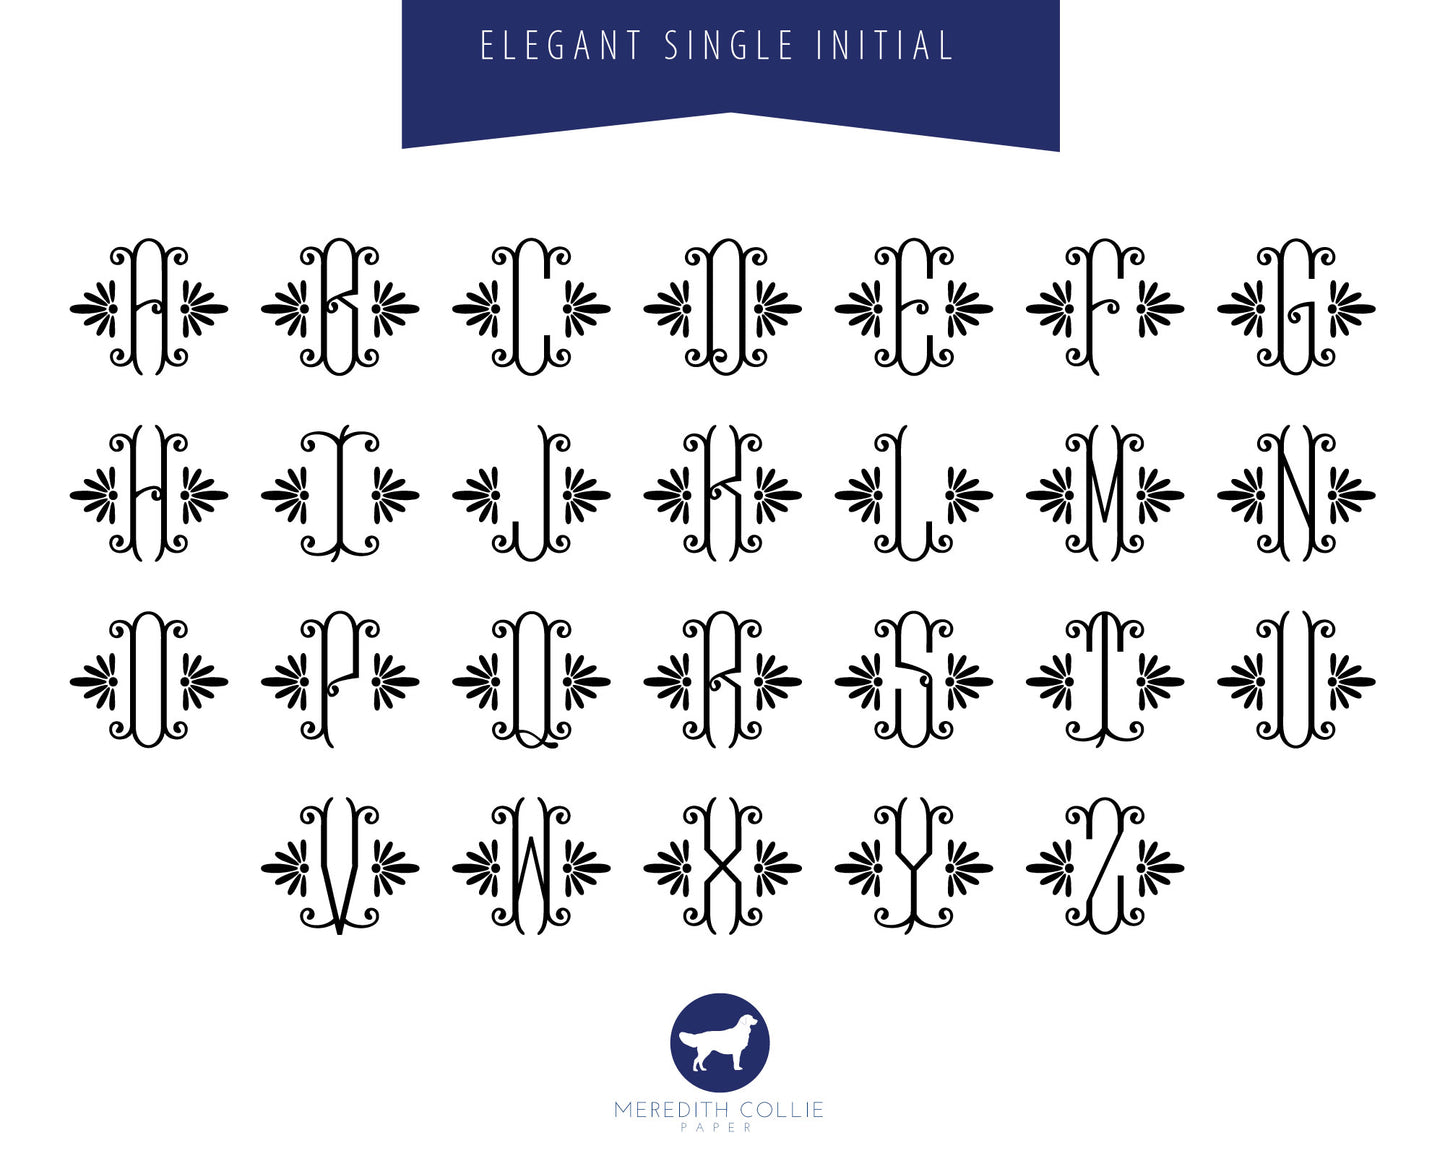 Elegant Single Initial Monogram Stationery